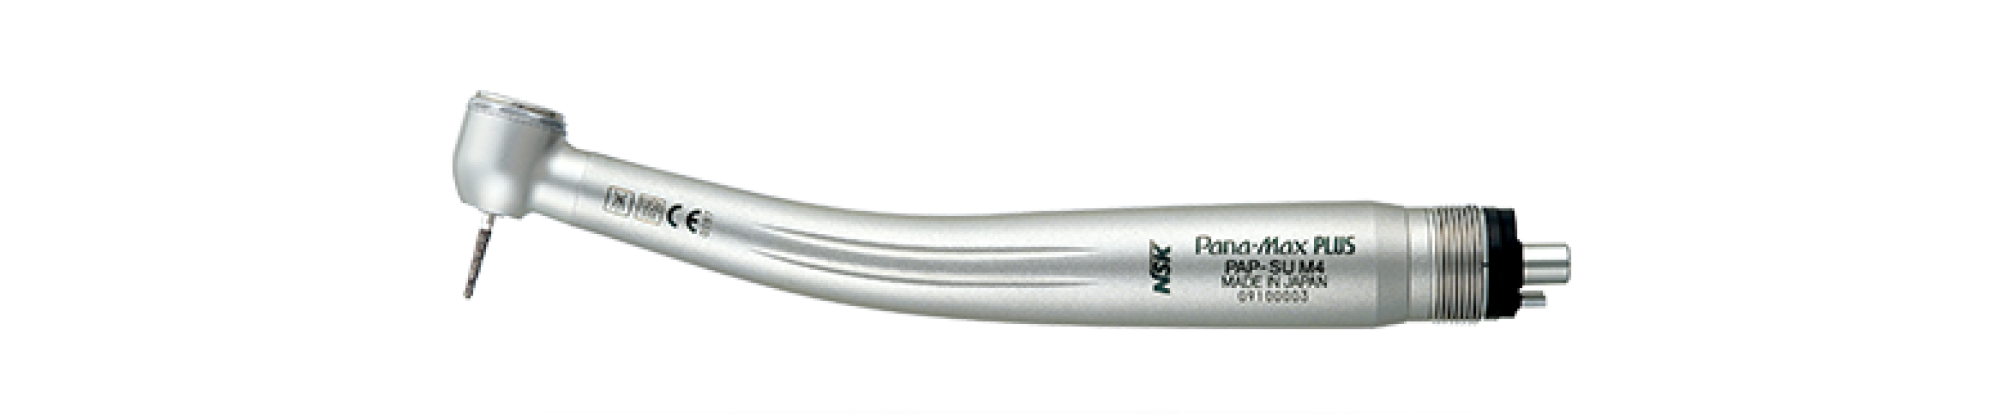 Турбинный наконечник PANA MAX PLUS с 4-х канальным спреем (NSK)